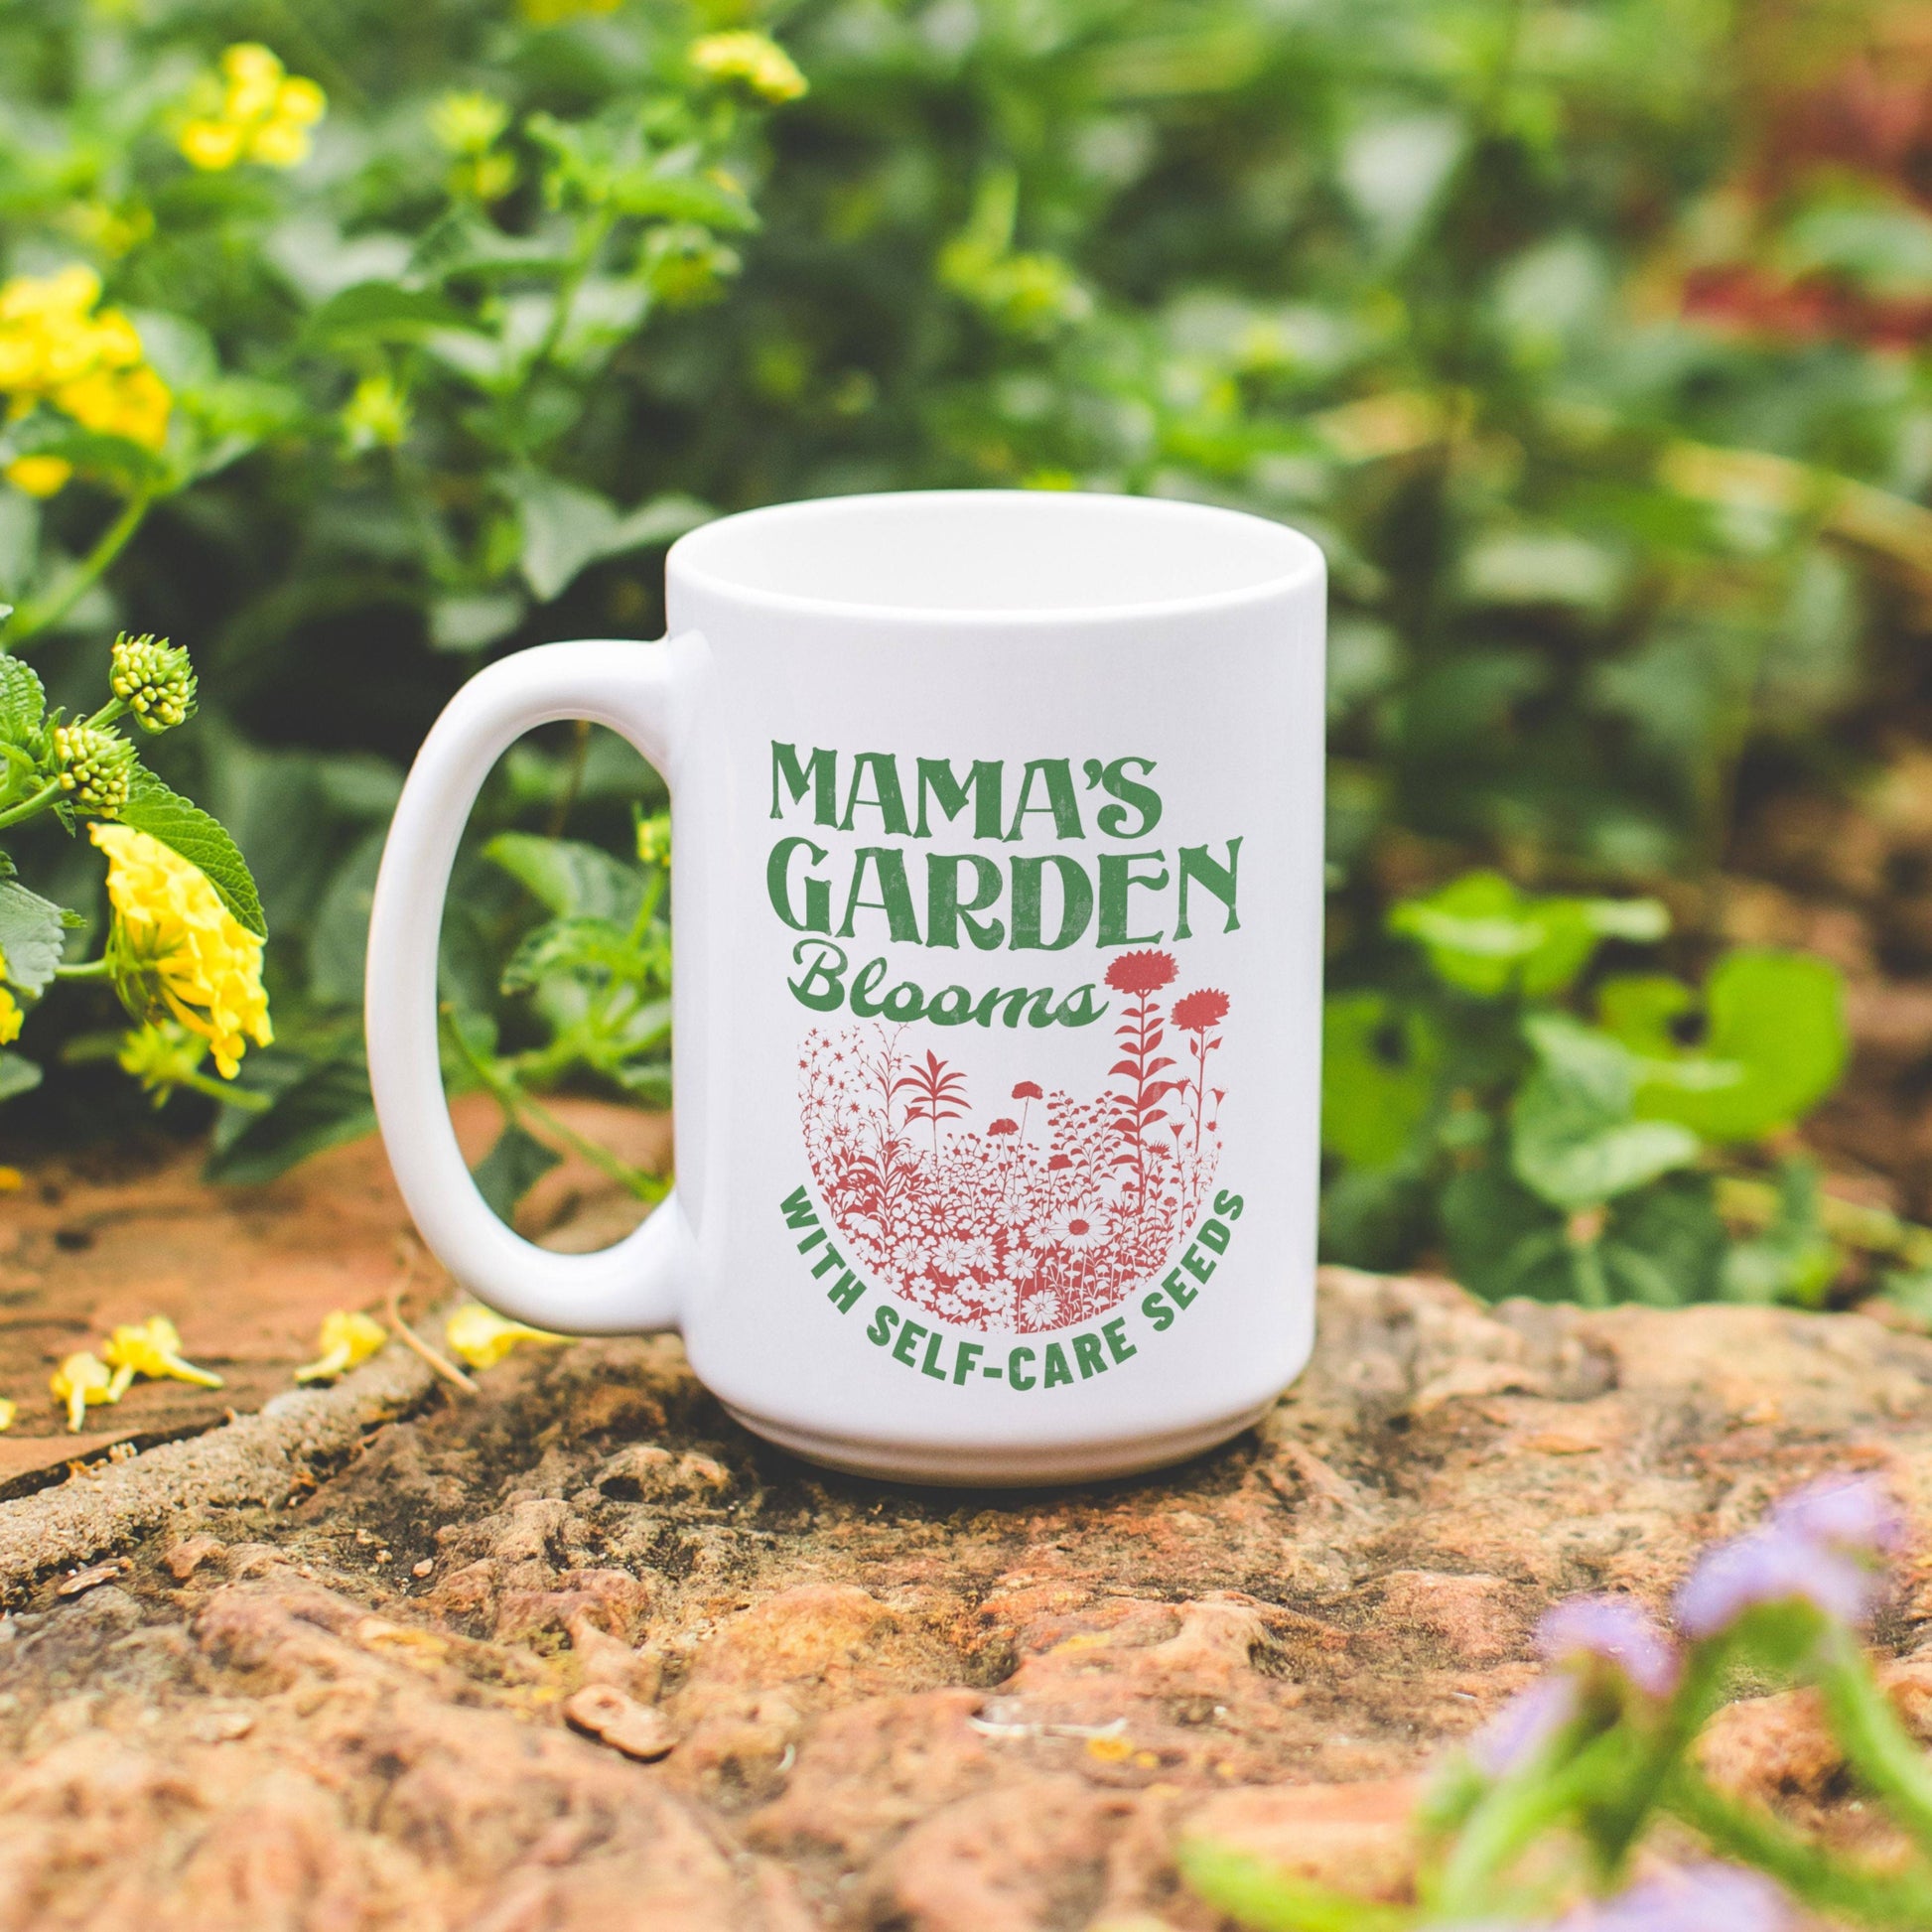 mama's garden blooms with self-care seeds mug